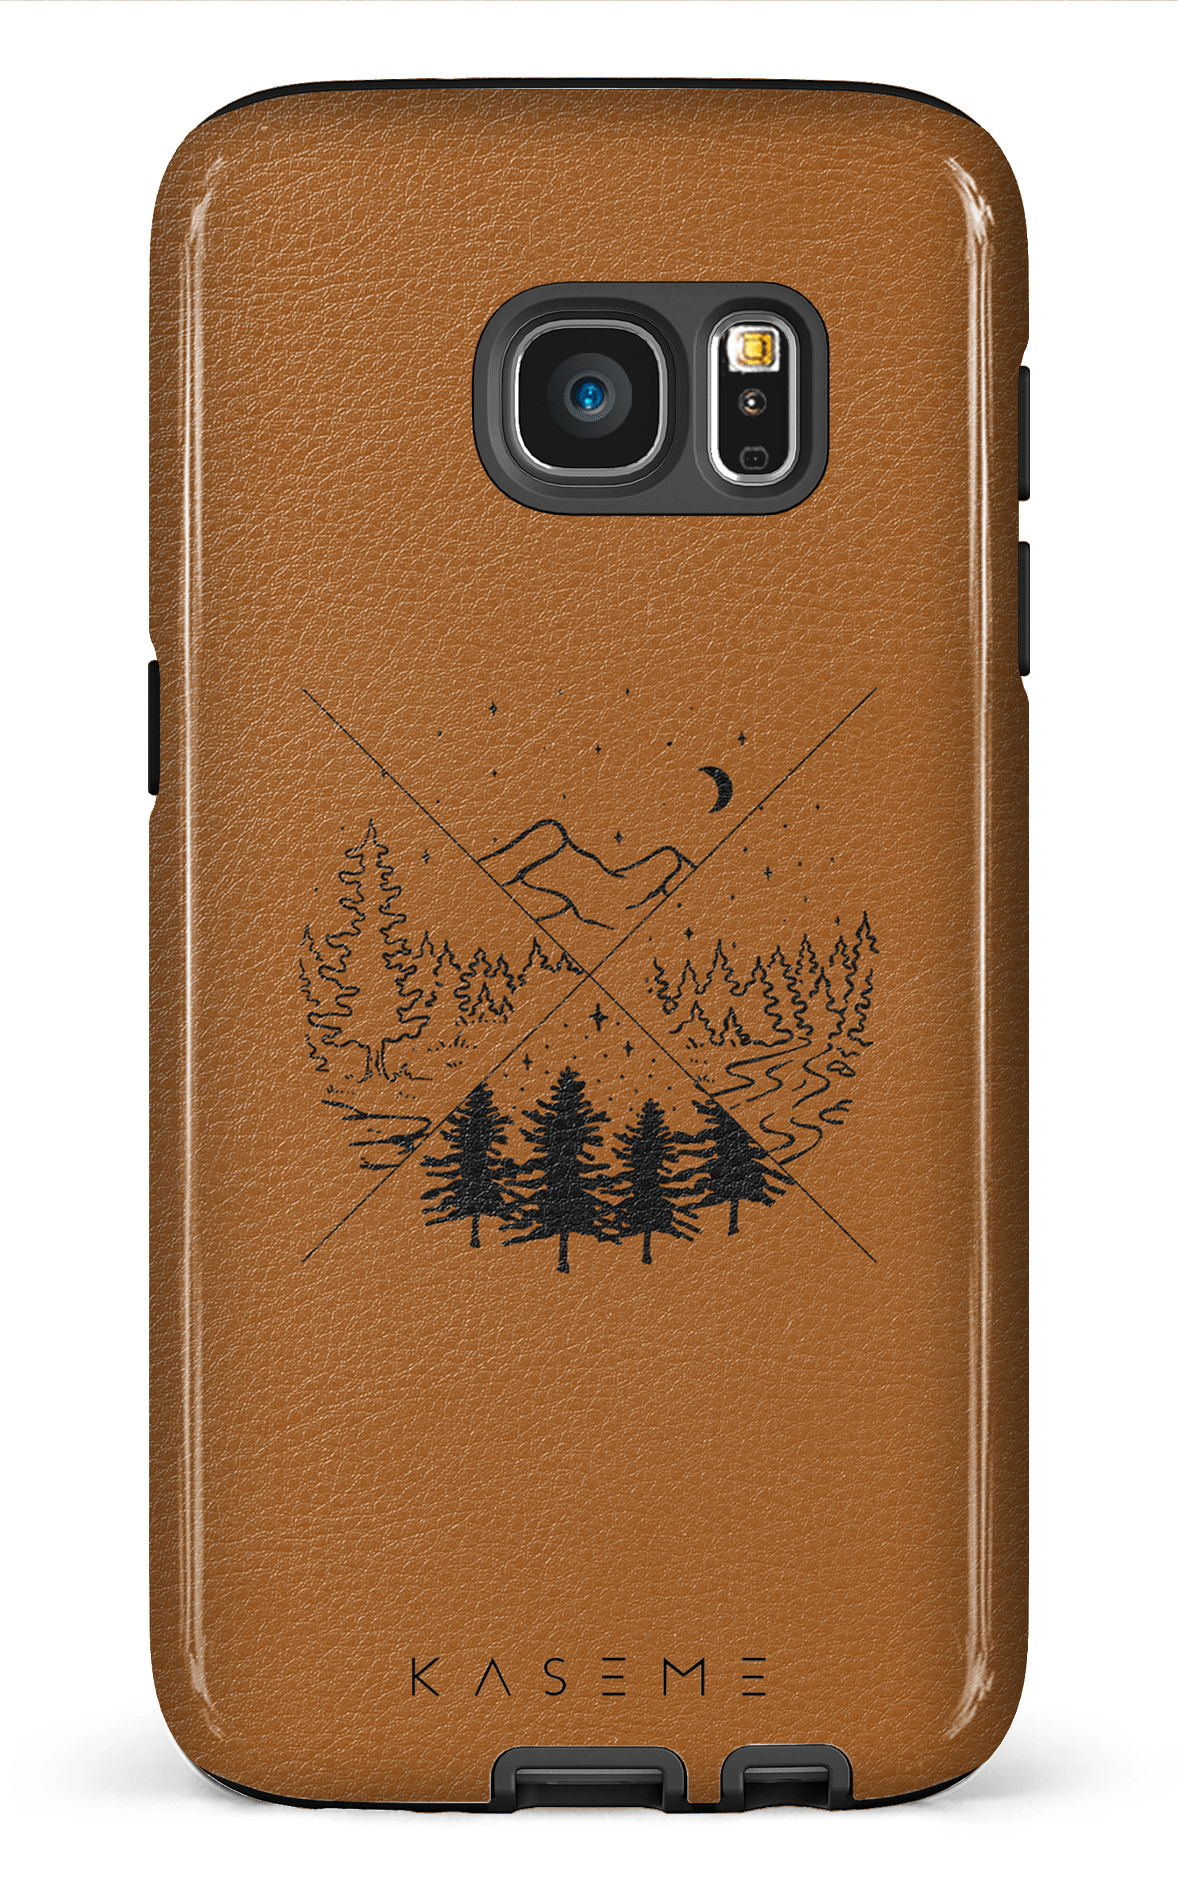 Hike - Galaxy S7